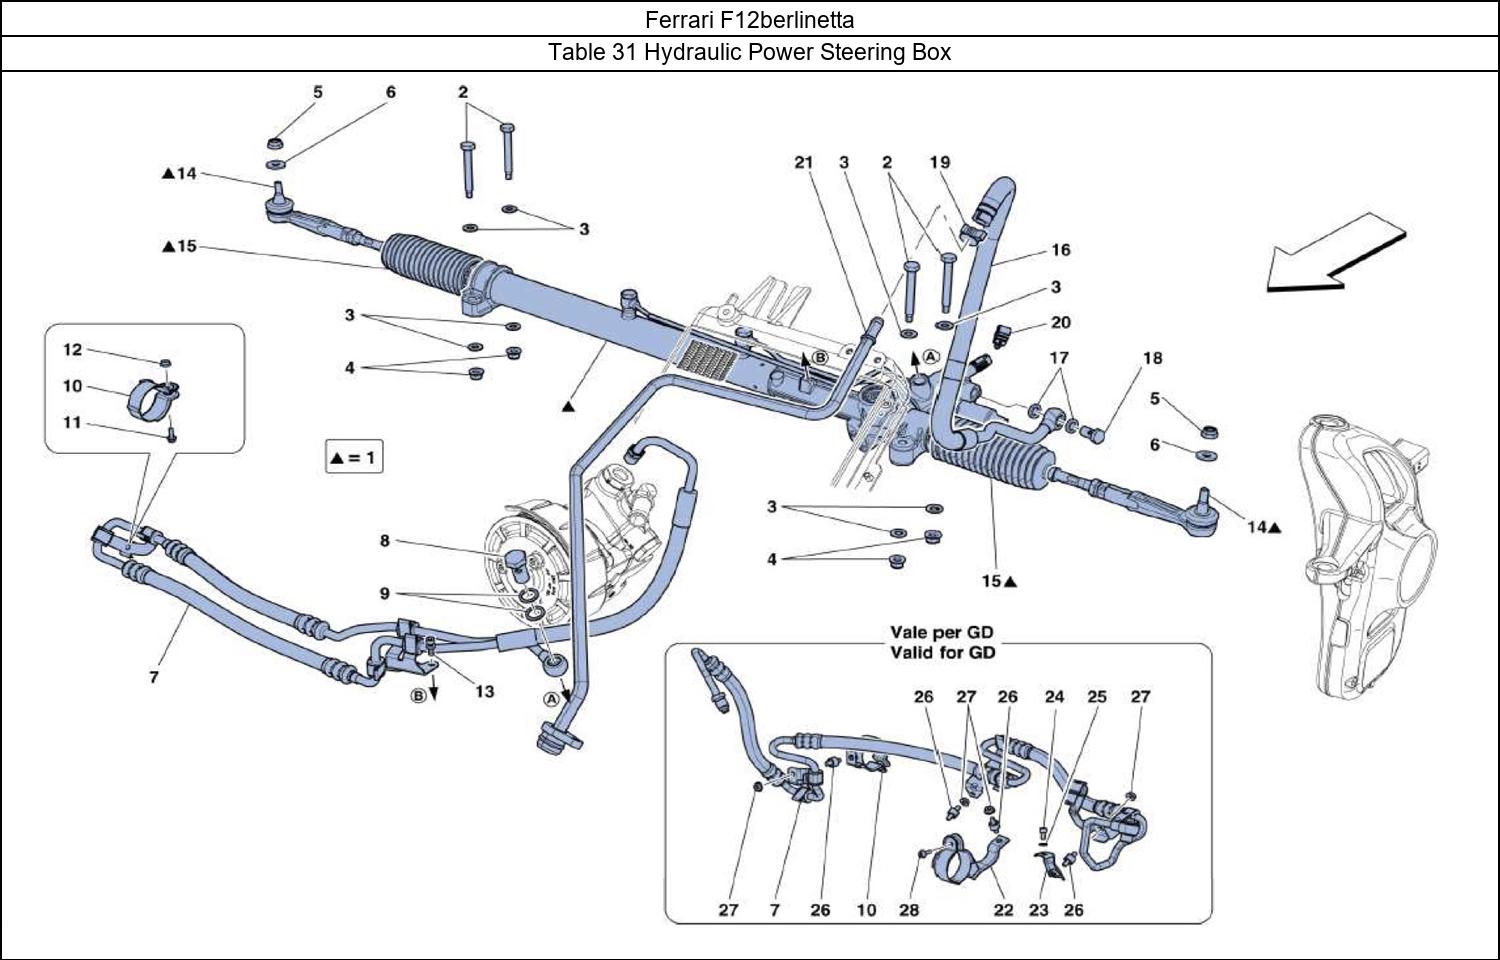 Ferrari Parts Ferrari F12berlinetta Table 31 Hydraulic Power Steering Box